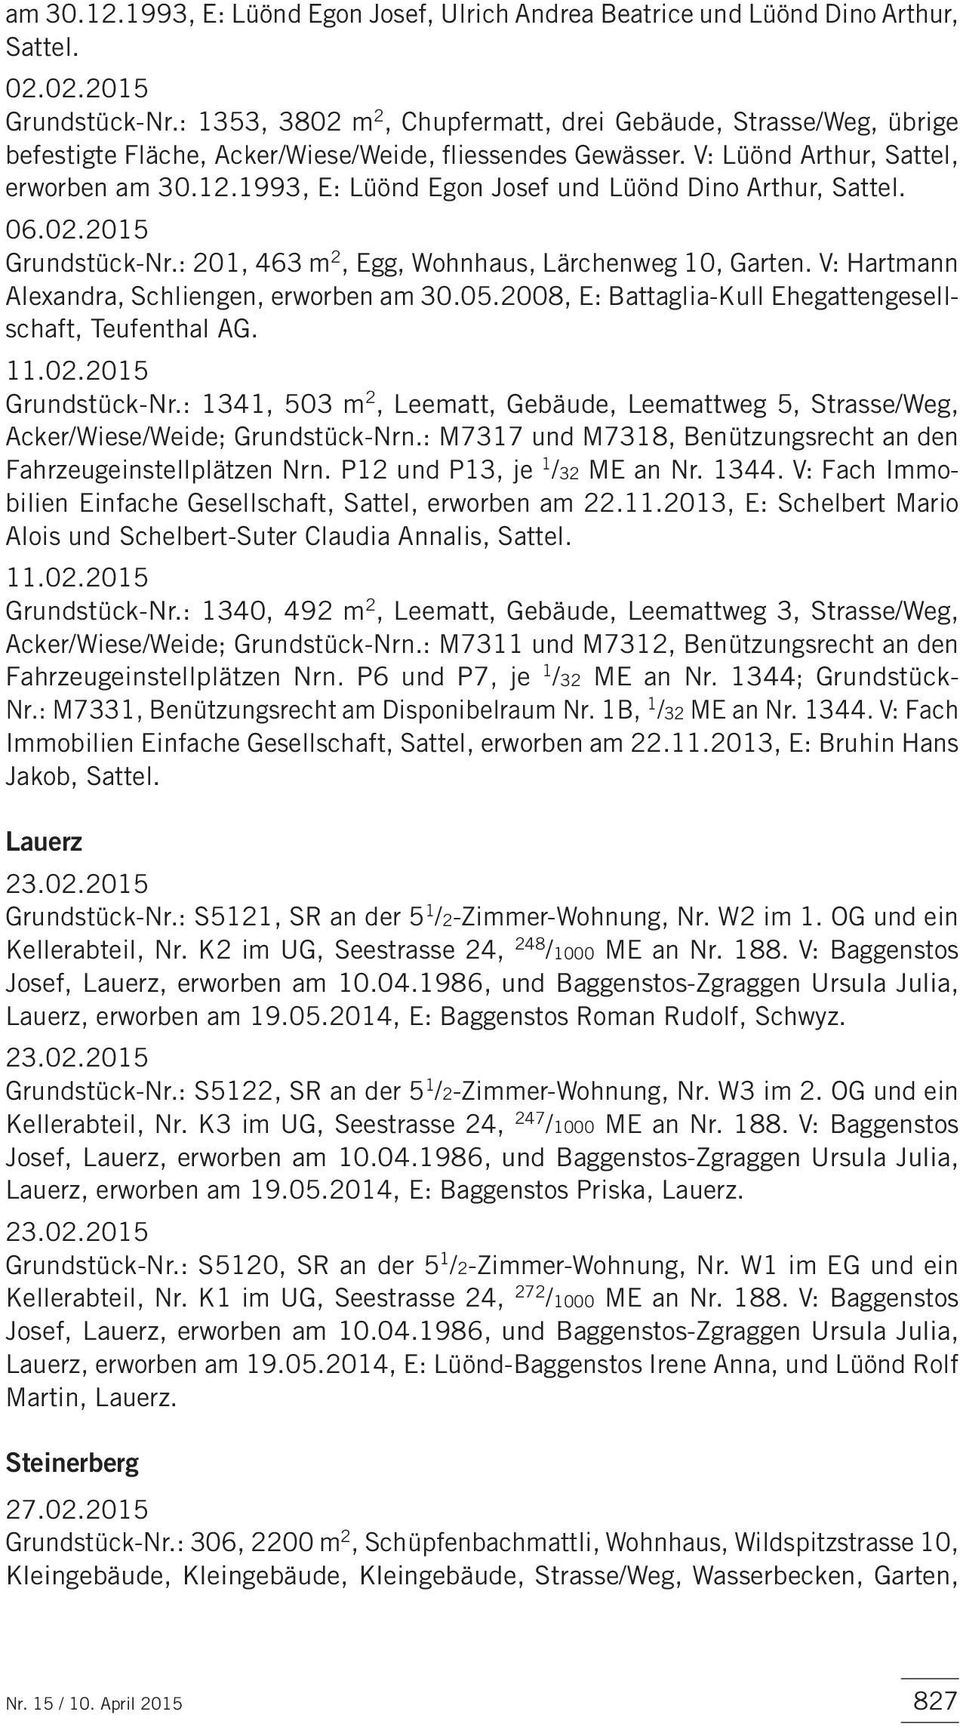 1993, E: Lüönd Egon Josef und Lüönd Dino Arthur, Sattel. 06.02.2015 Grundstück-Nr.: 201, 463 m 2, Egg, Wohnhaus, Lärchenweg 10, Garten. V: Hartmann Alexandra, Schliengen, erworben am 30.05.